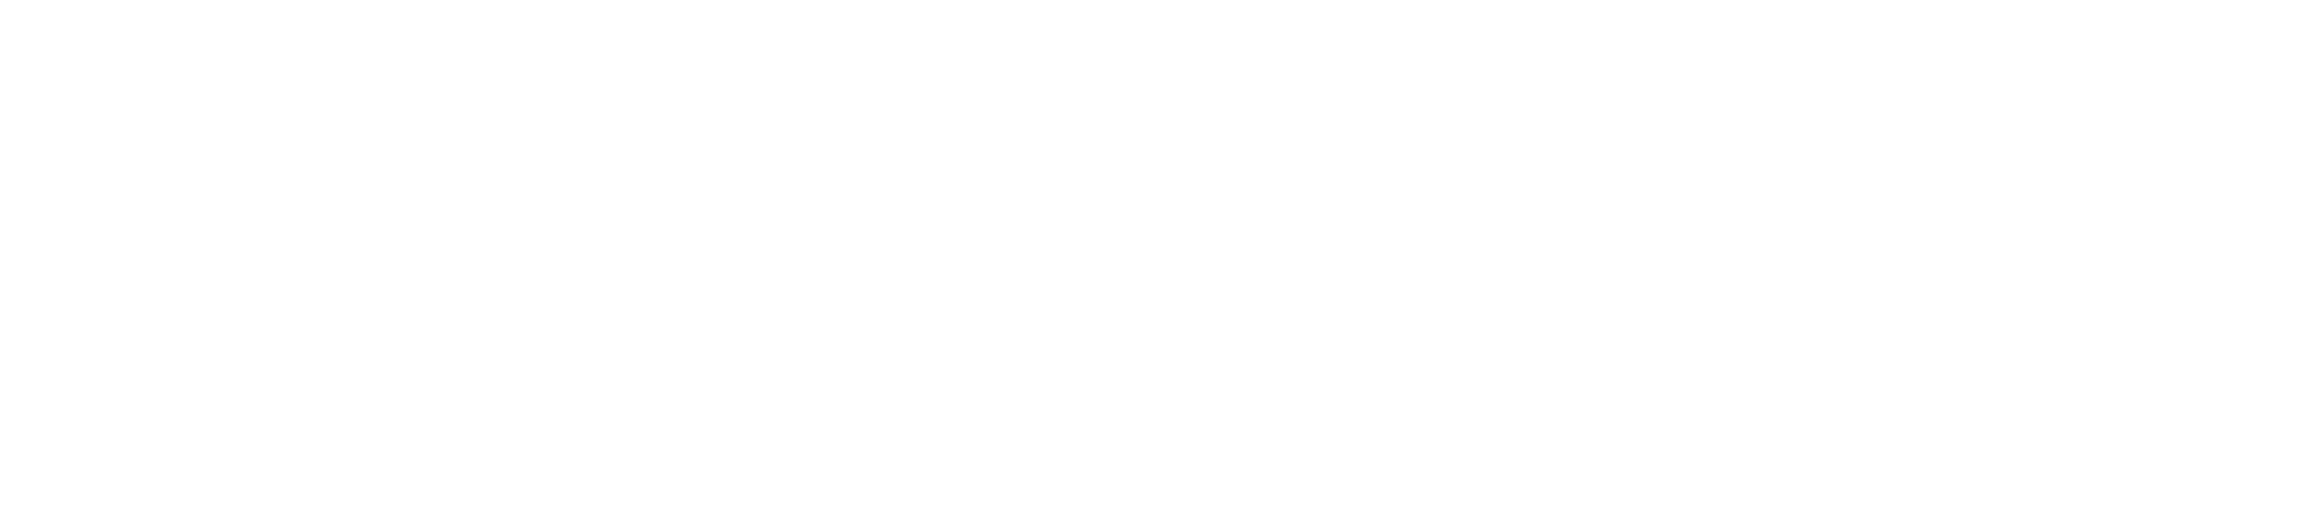 UPS Store Logo - UPS Logo